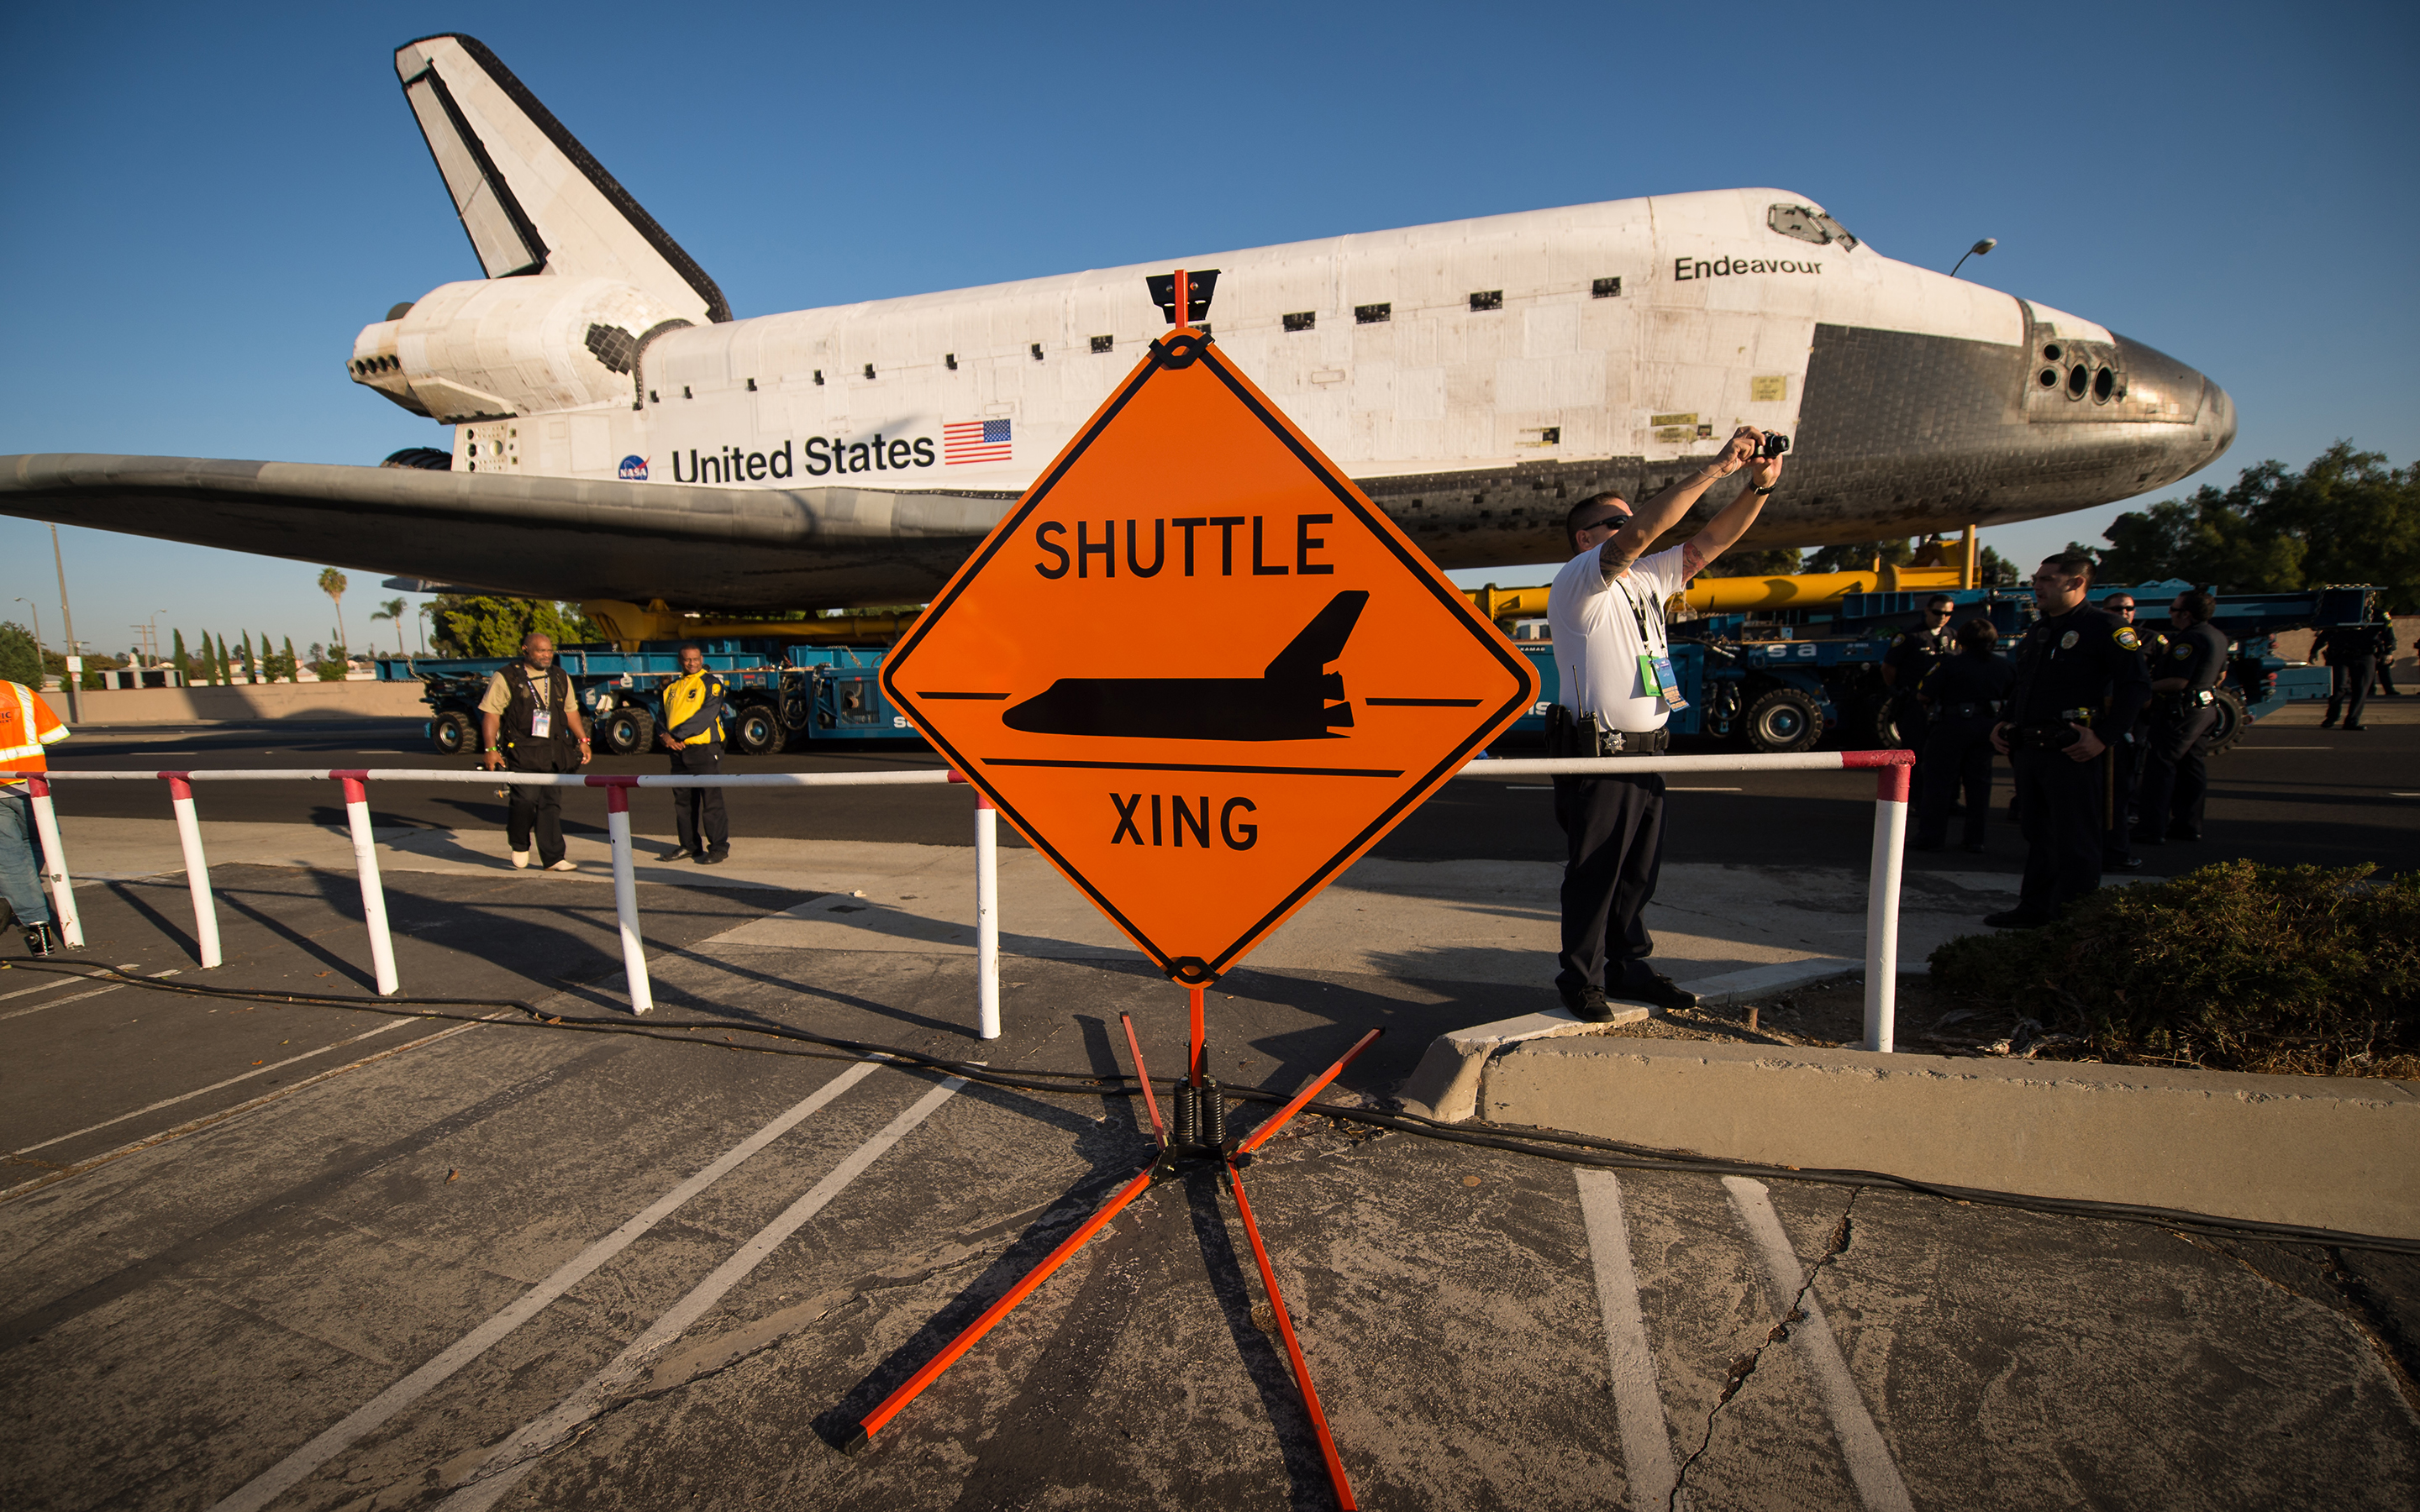 nasa, vehicles, space shuttle endeavour, airplane, shuttle, space shuttle, space shuttles